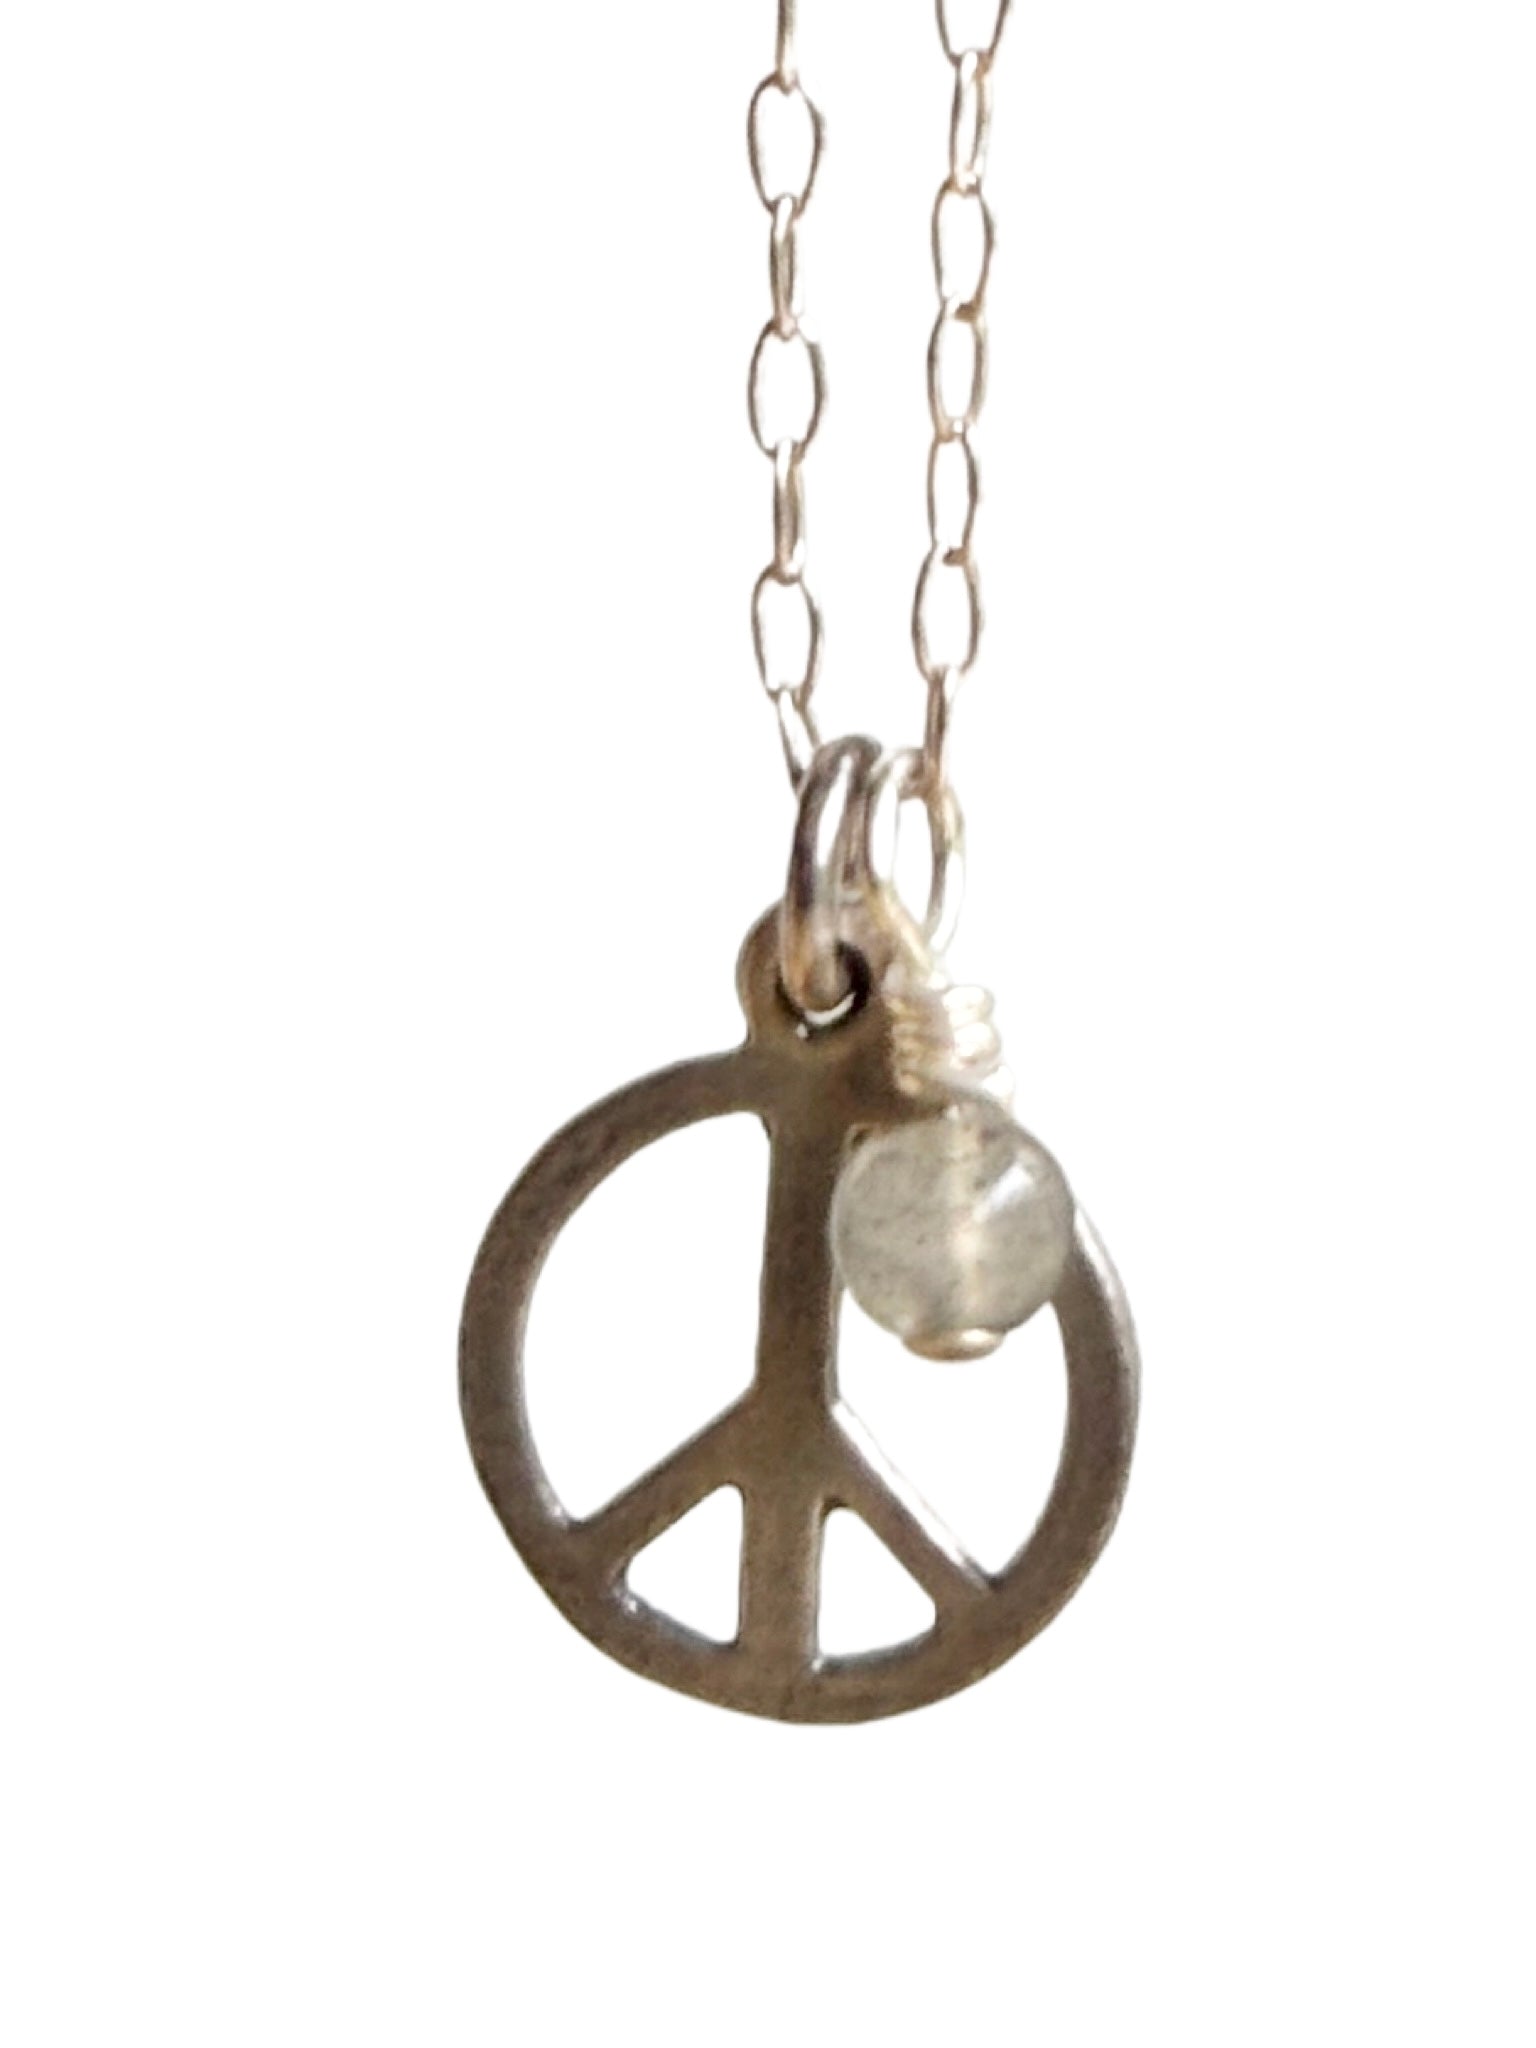 Peace Charm with Labradorite Necklace - Global Village Kailua Boutique